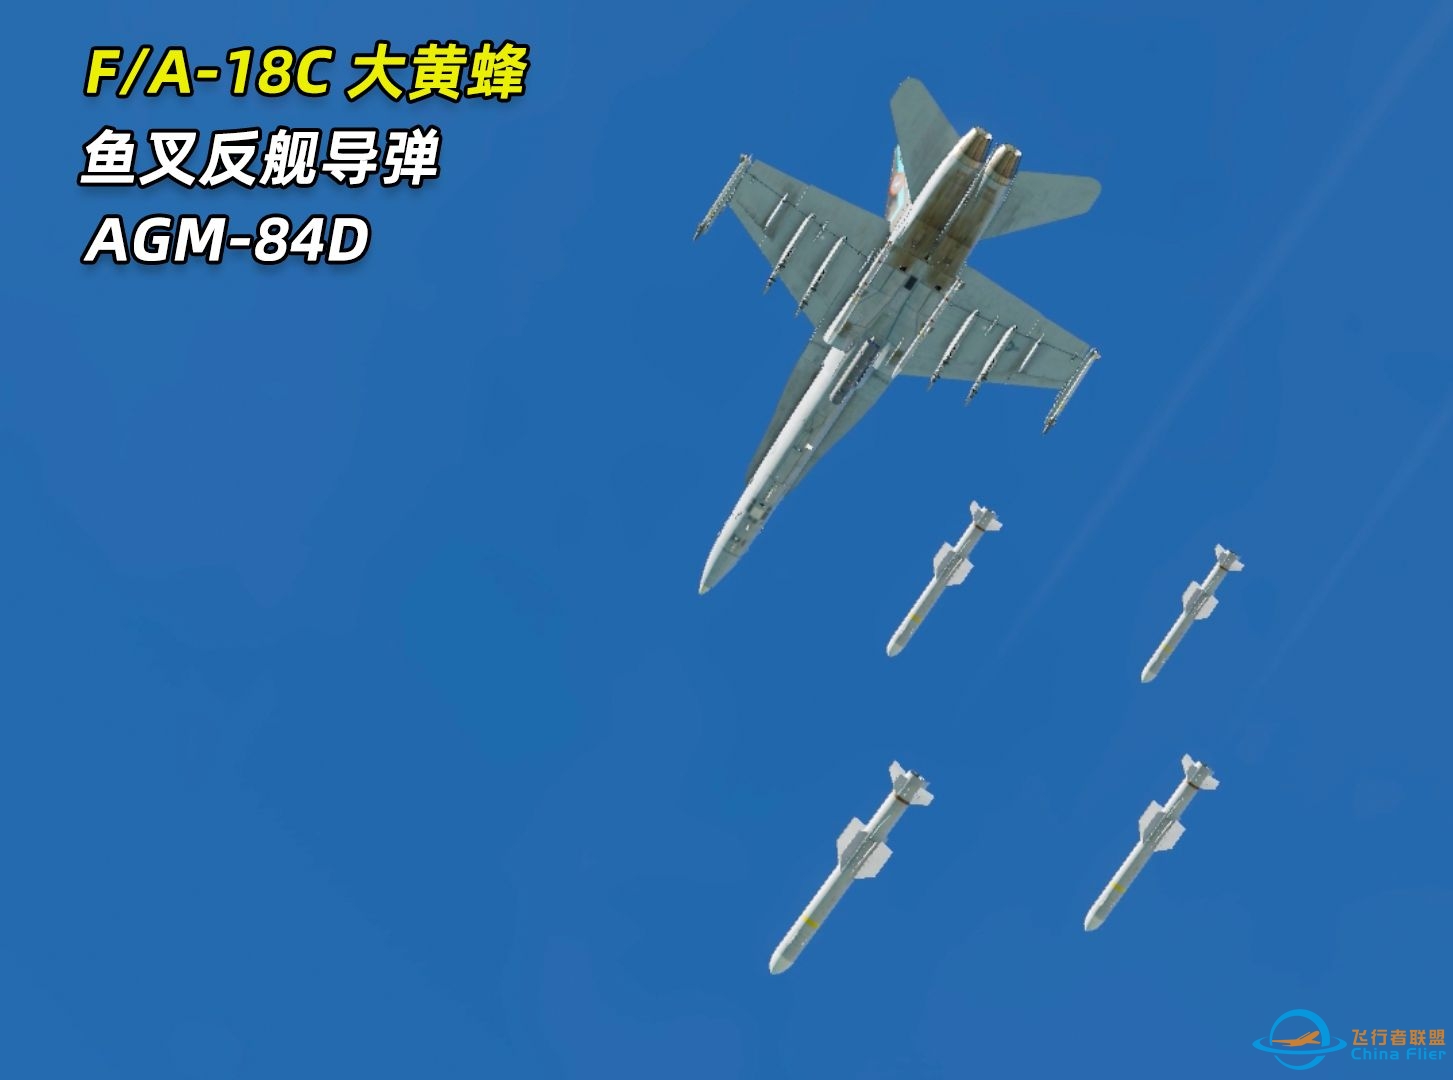 dcs world F/A18-C大黄蜂鱼叉反舰导弹 AGM84D（BOL模式）-674 